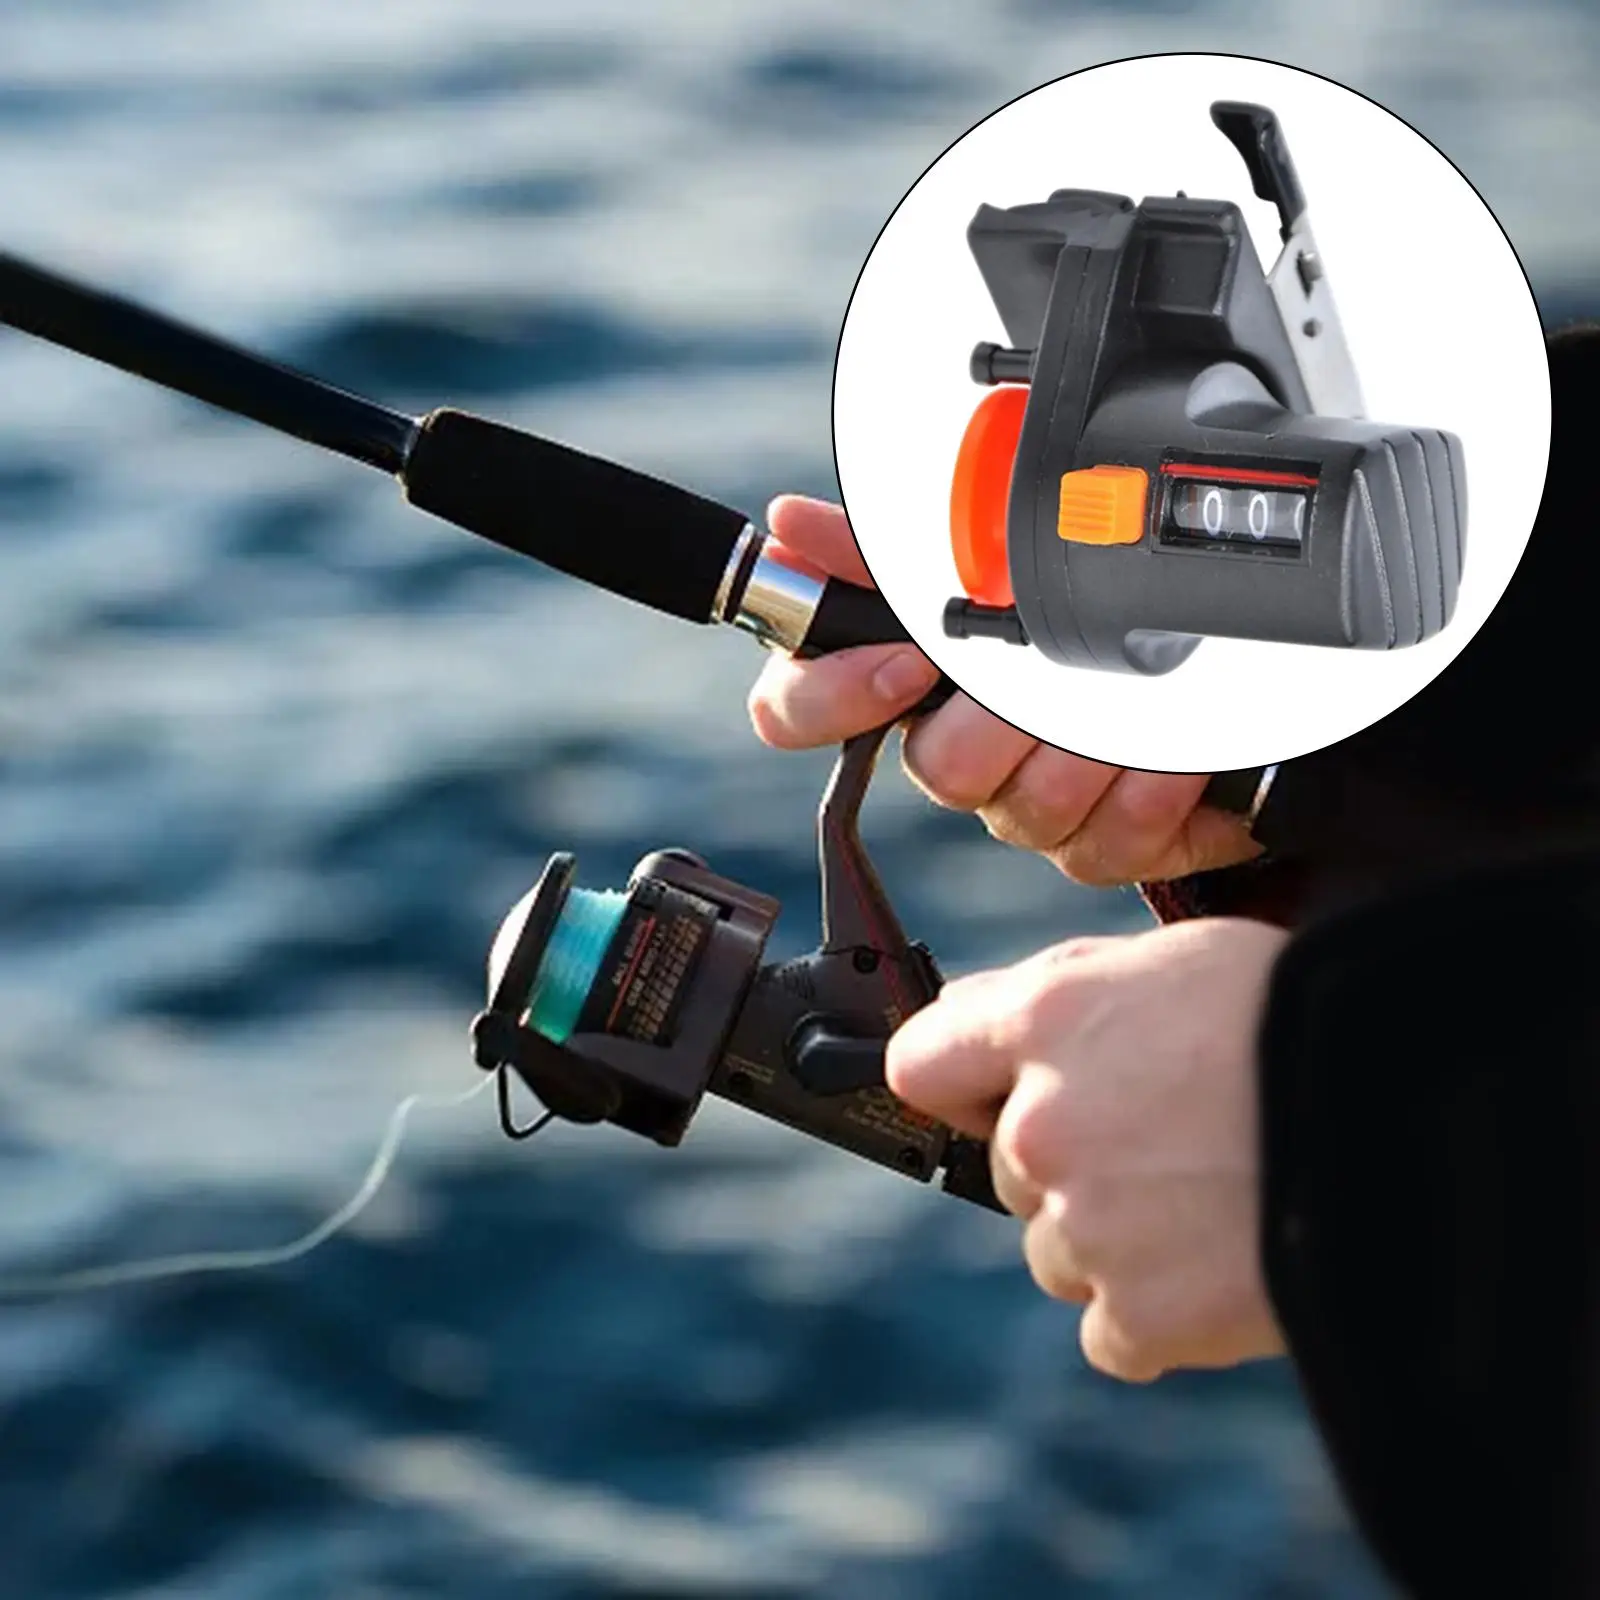 Digital Fishing Line Counter Depth Finder Depth Gauge Counter Tackle Tool for Beach Fishing Bridge Fishing Raft Fishing